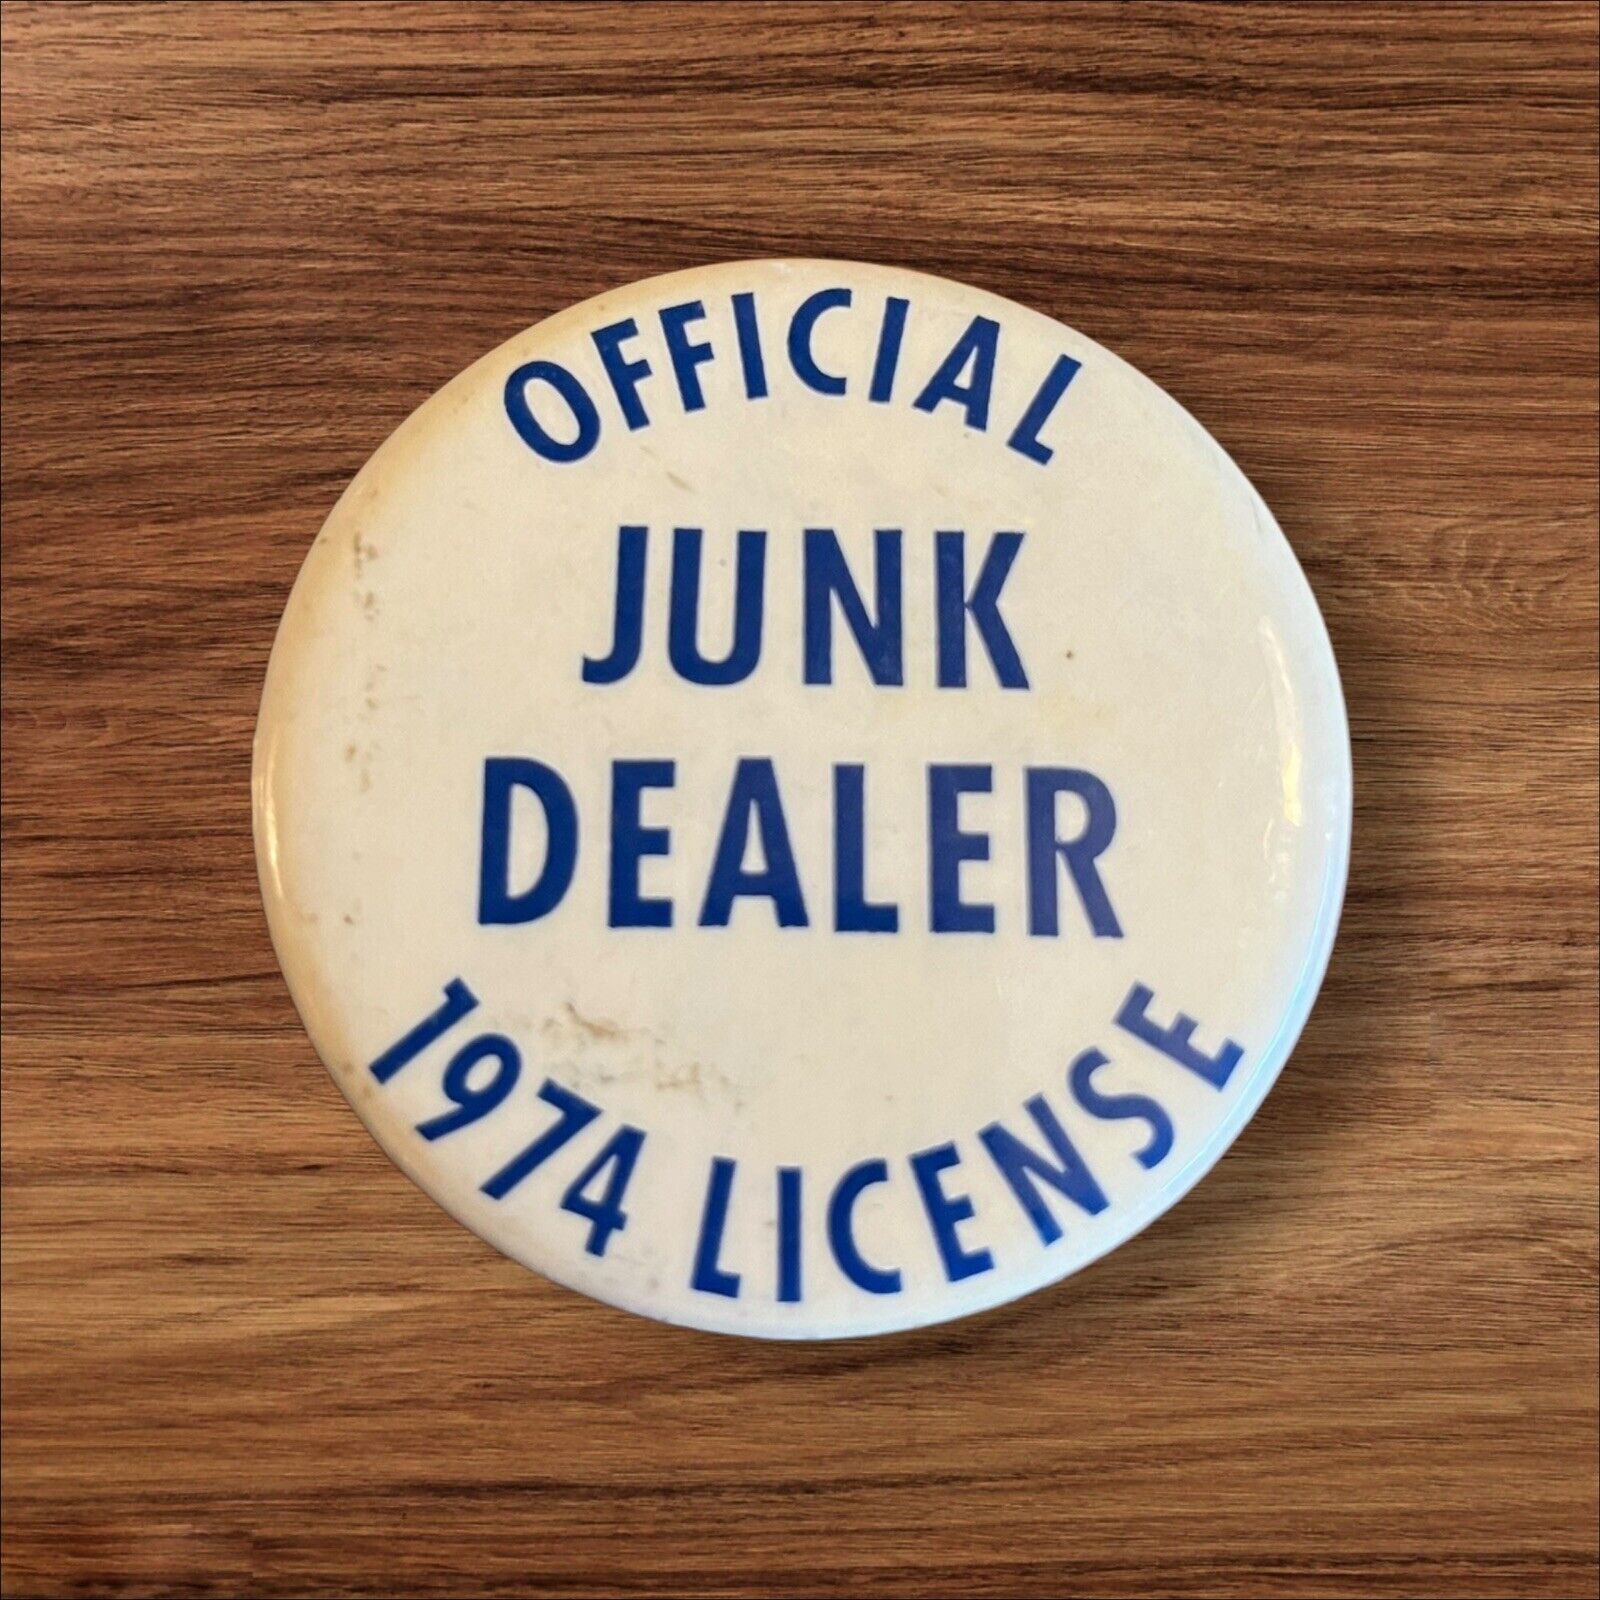 1974 Official Junk Dealer License Pinback Button Pin Flea Market